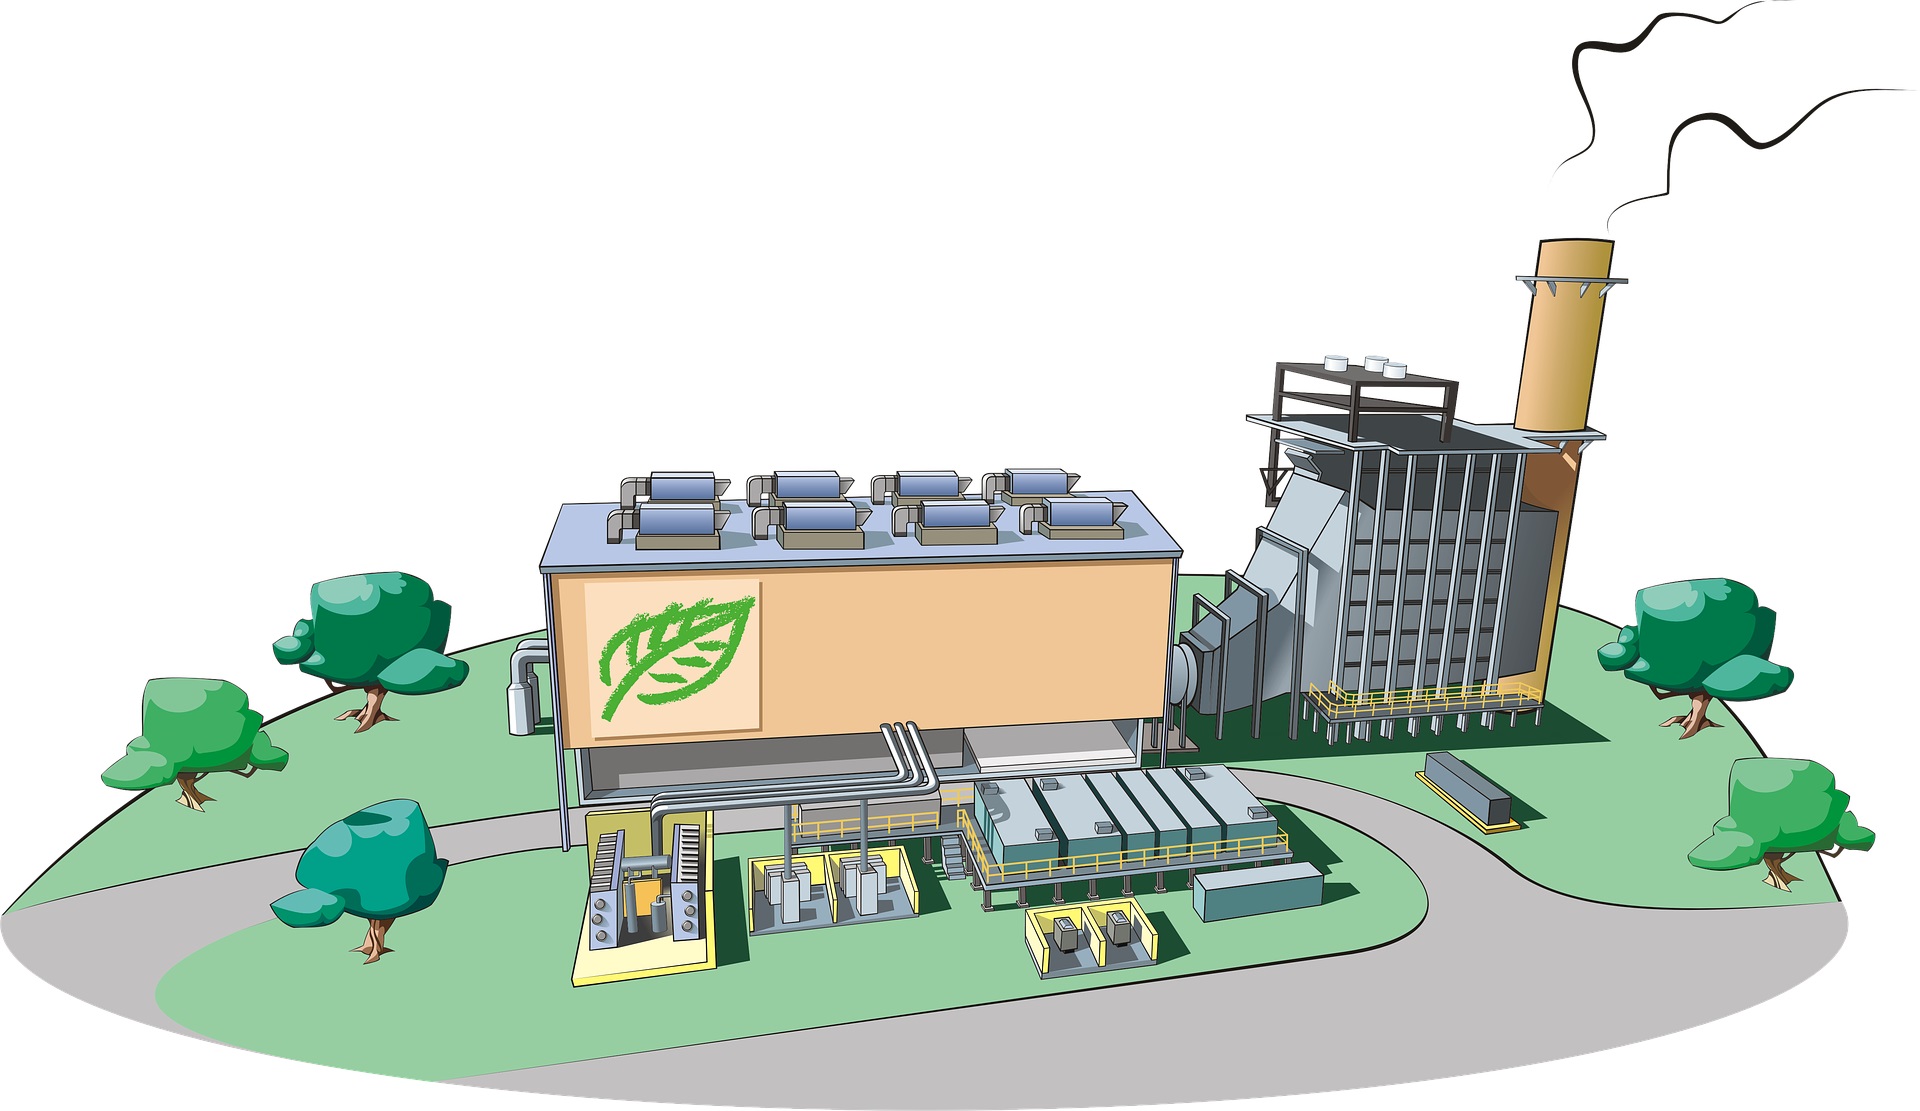 Cartoon image of a processing center